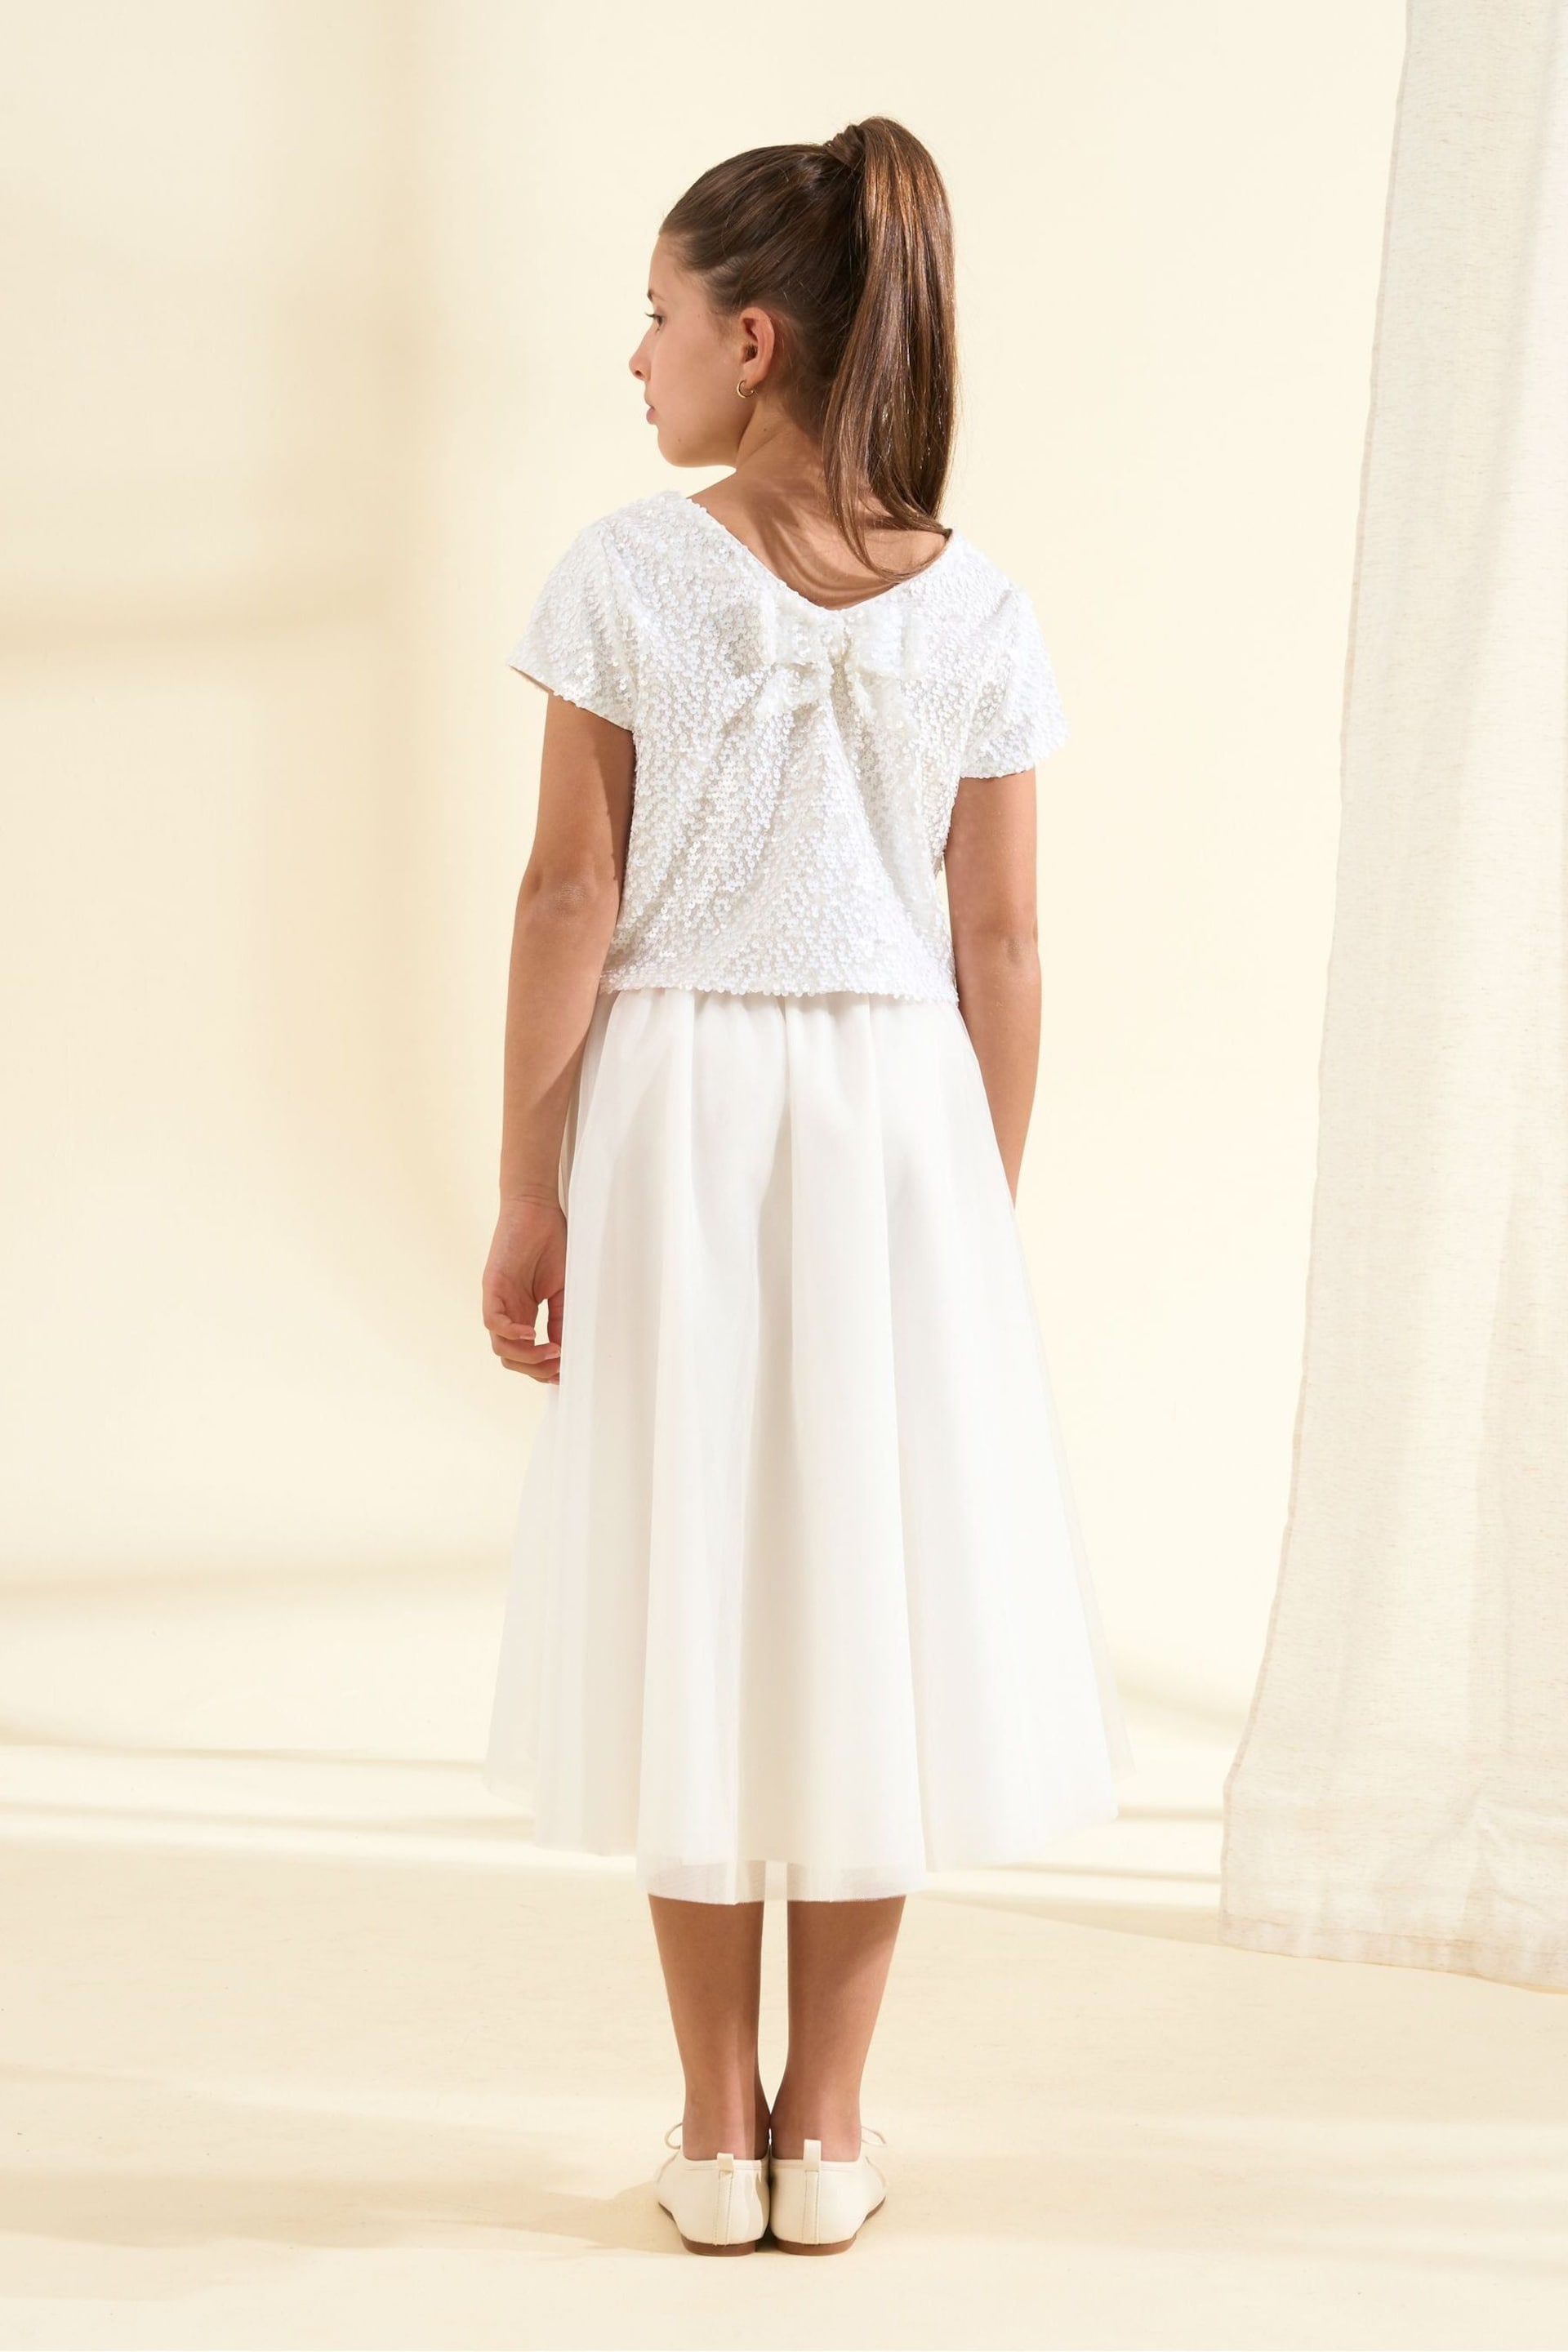 Angel & Rocket White Sequin Leonie Top & Skirt Set - Image 4 of 5